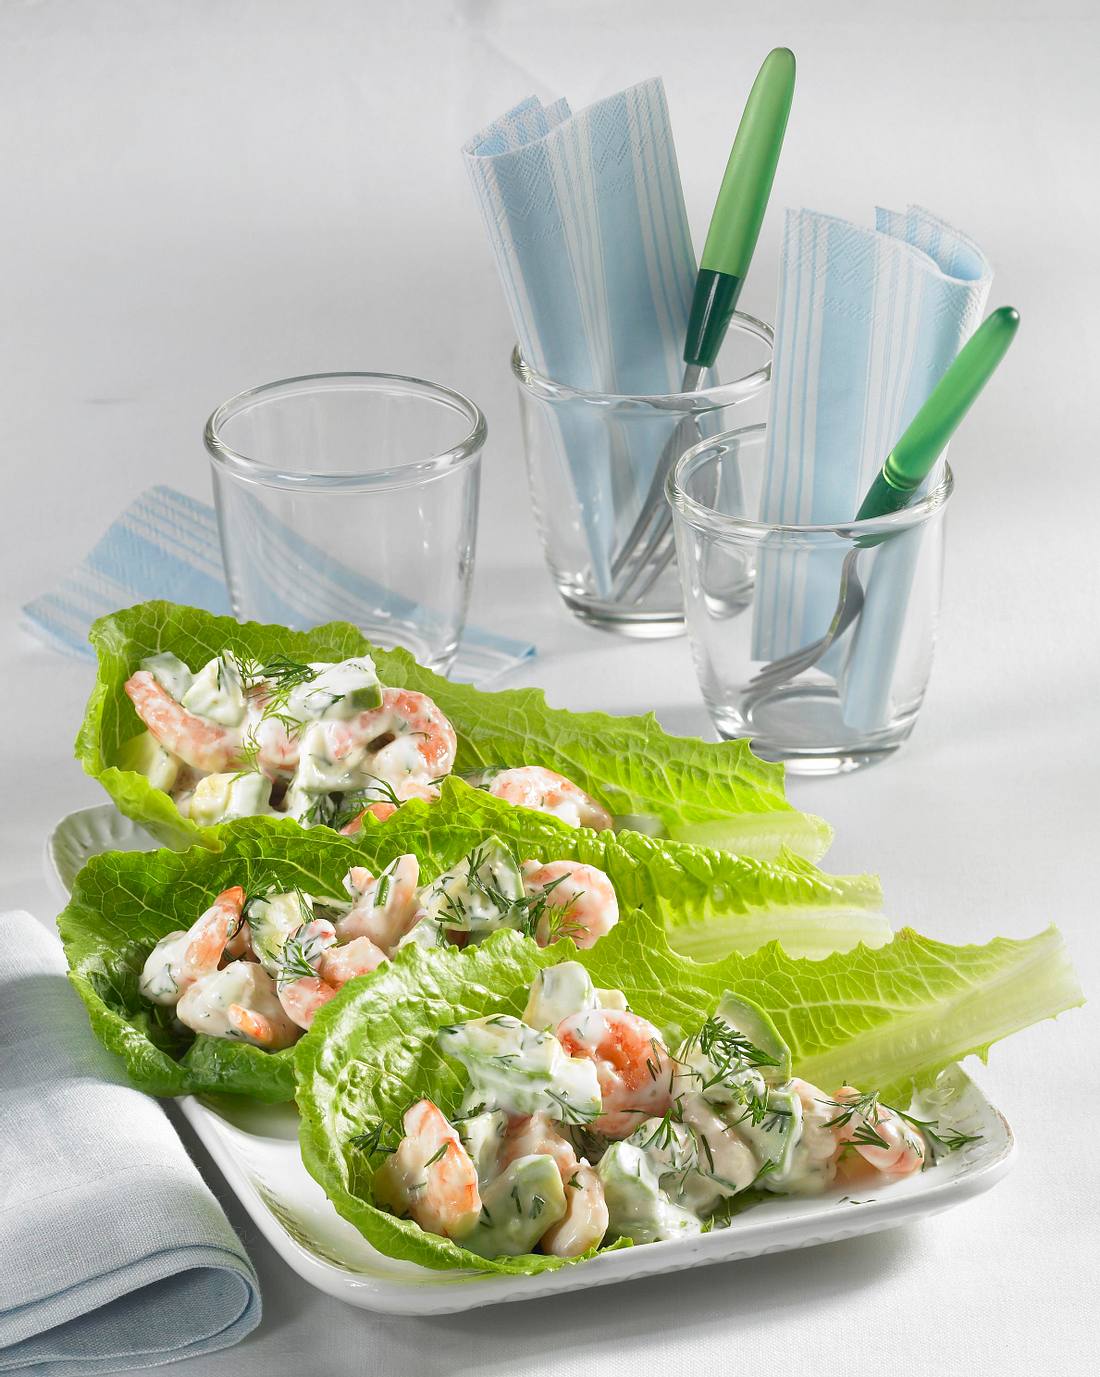 Knoblauch-Shrimps auf Römersalat Rezept | LECKER